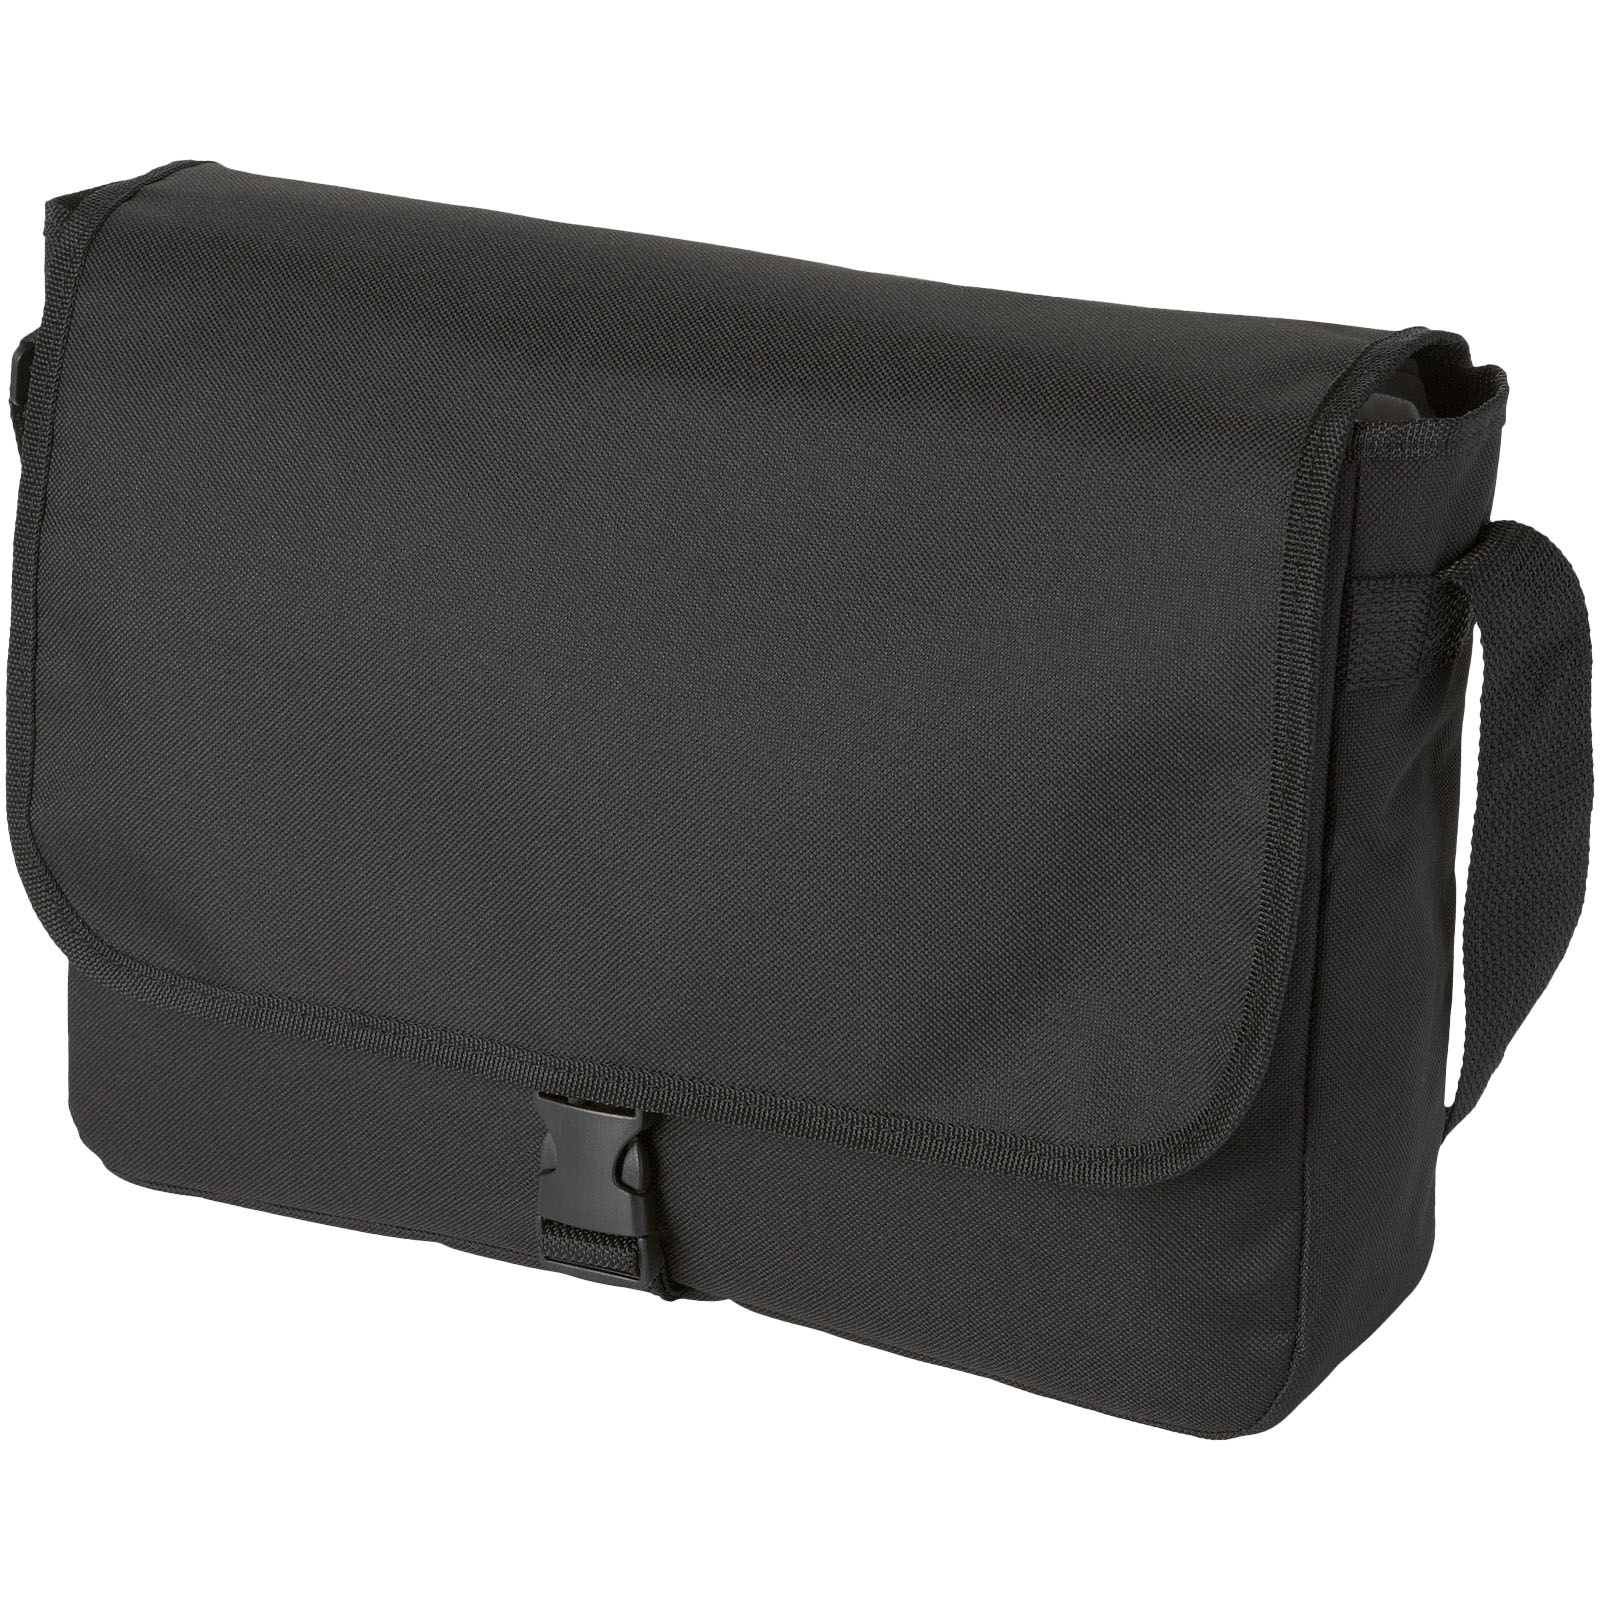 Adjustable Shoulder Bag with Buckle Closure - Islay